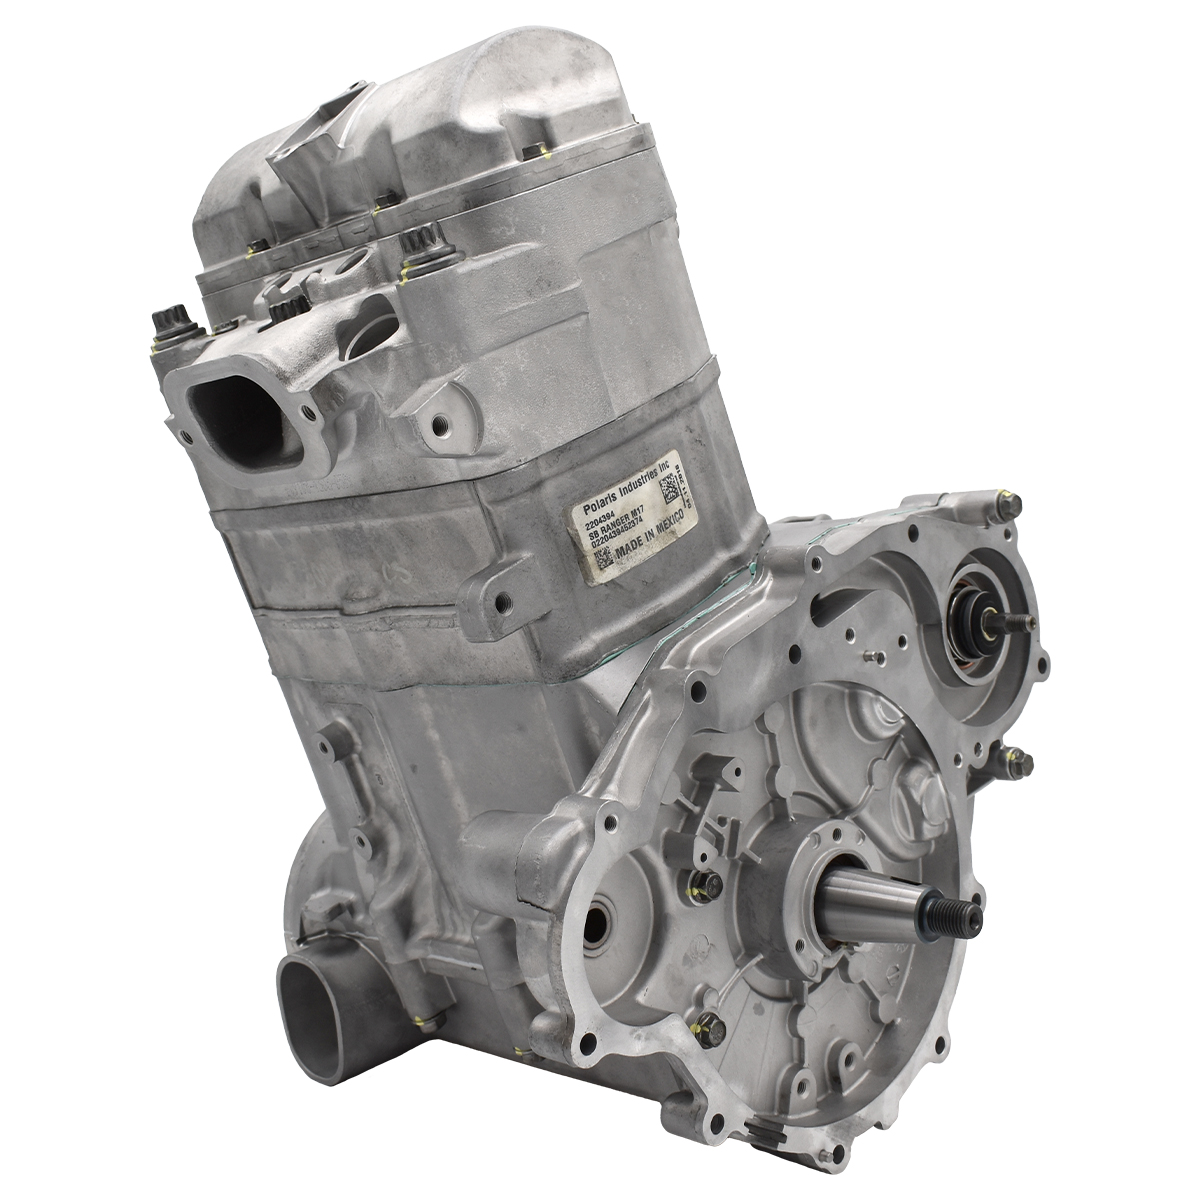 2011-2014 Polaris RZR 800 Engine